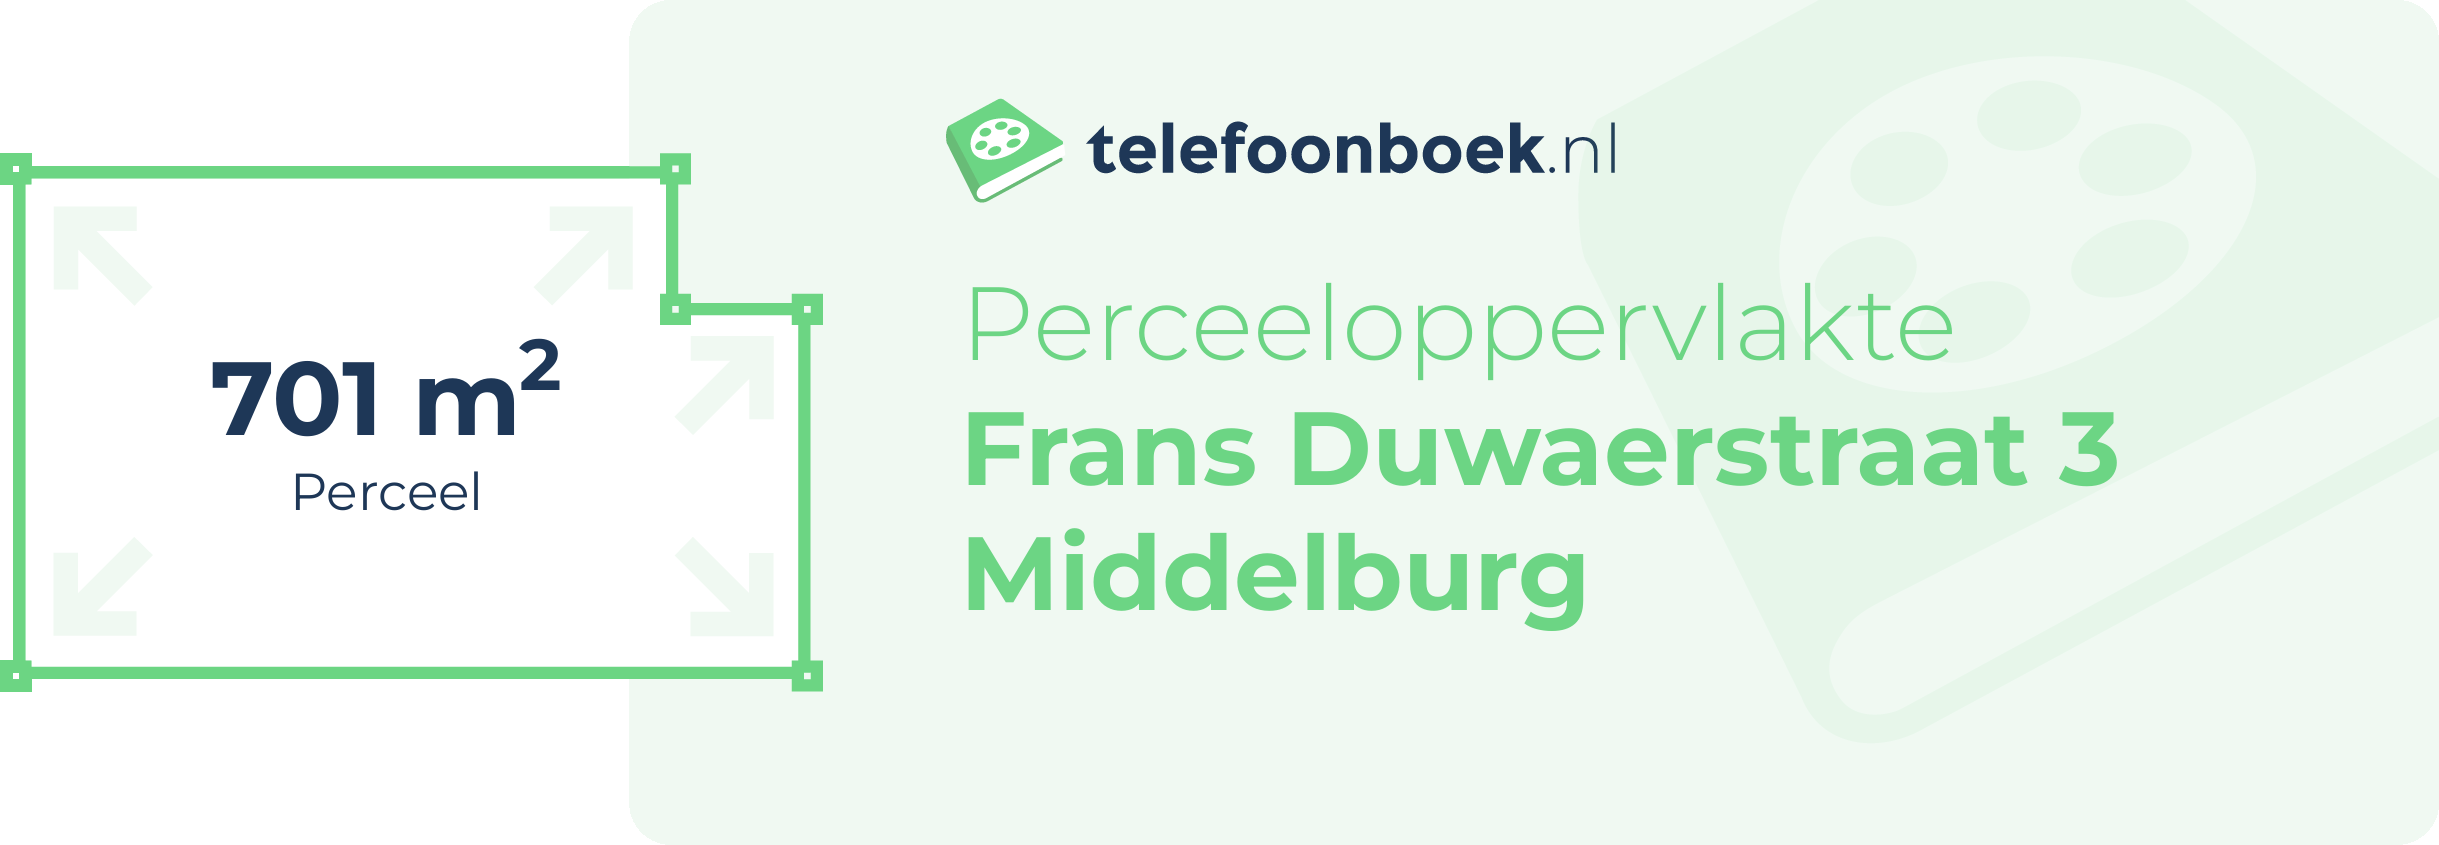 Perceeloppervlakte Frans Duwaerstraat 3 Middelburg